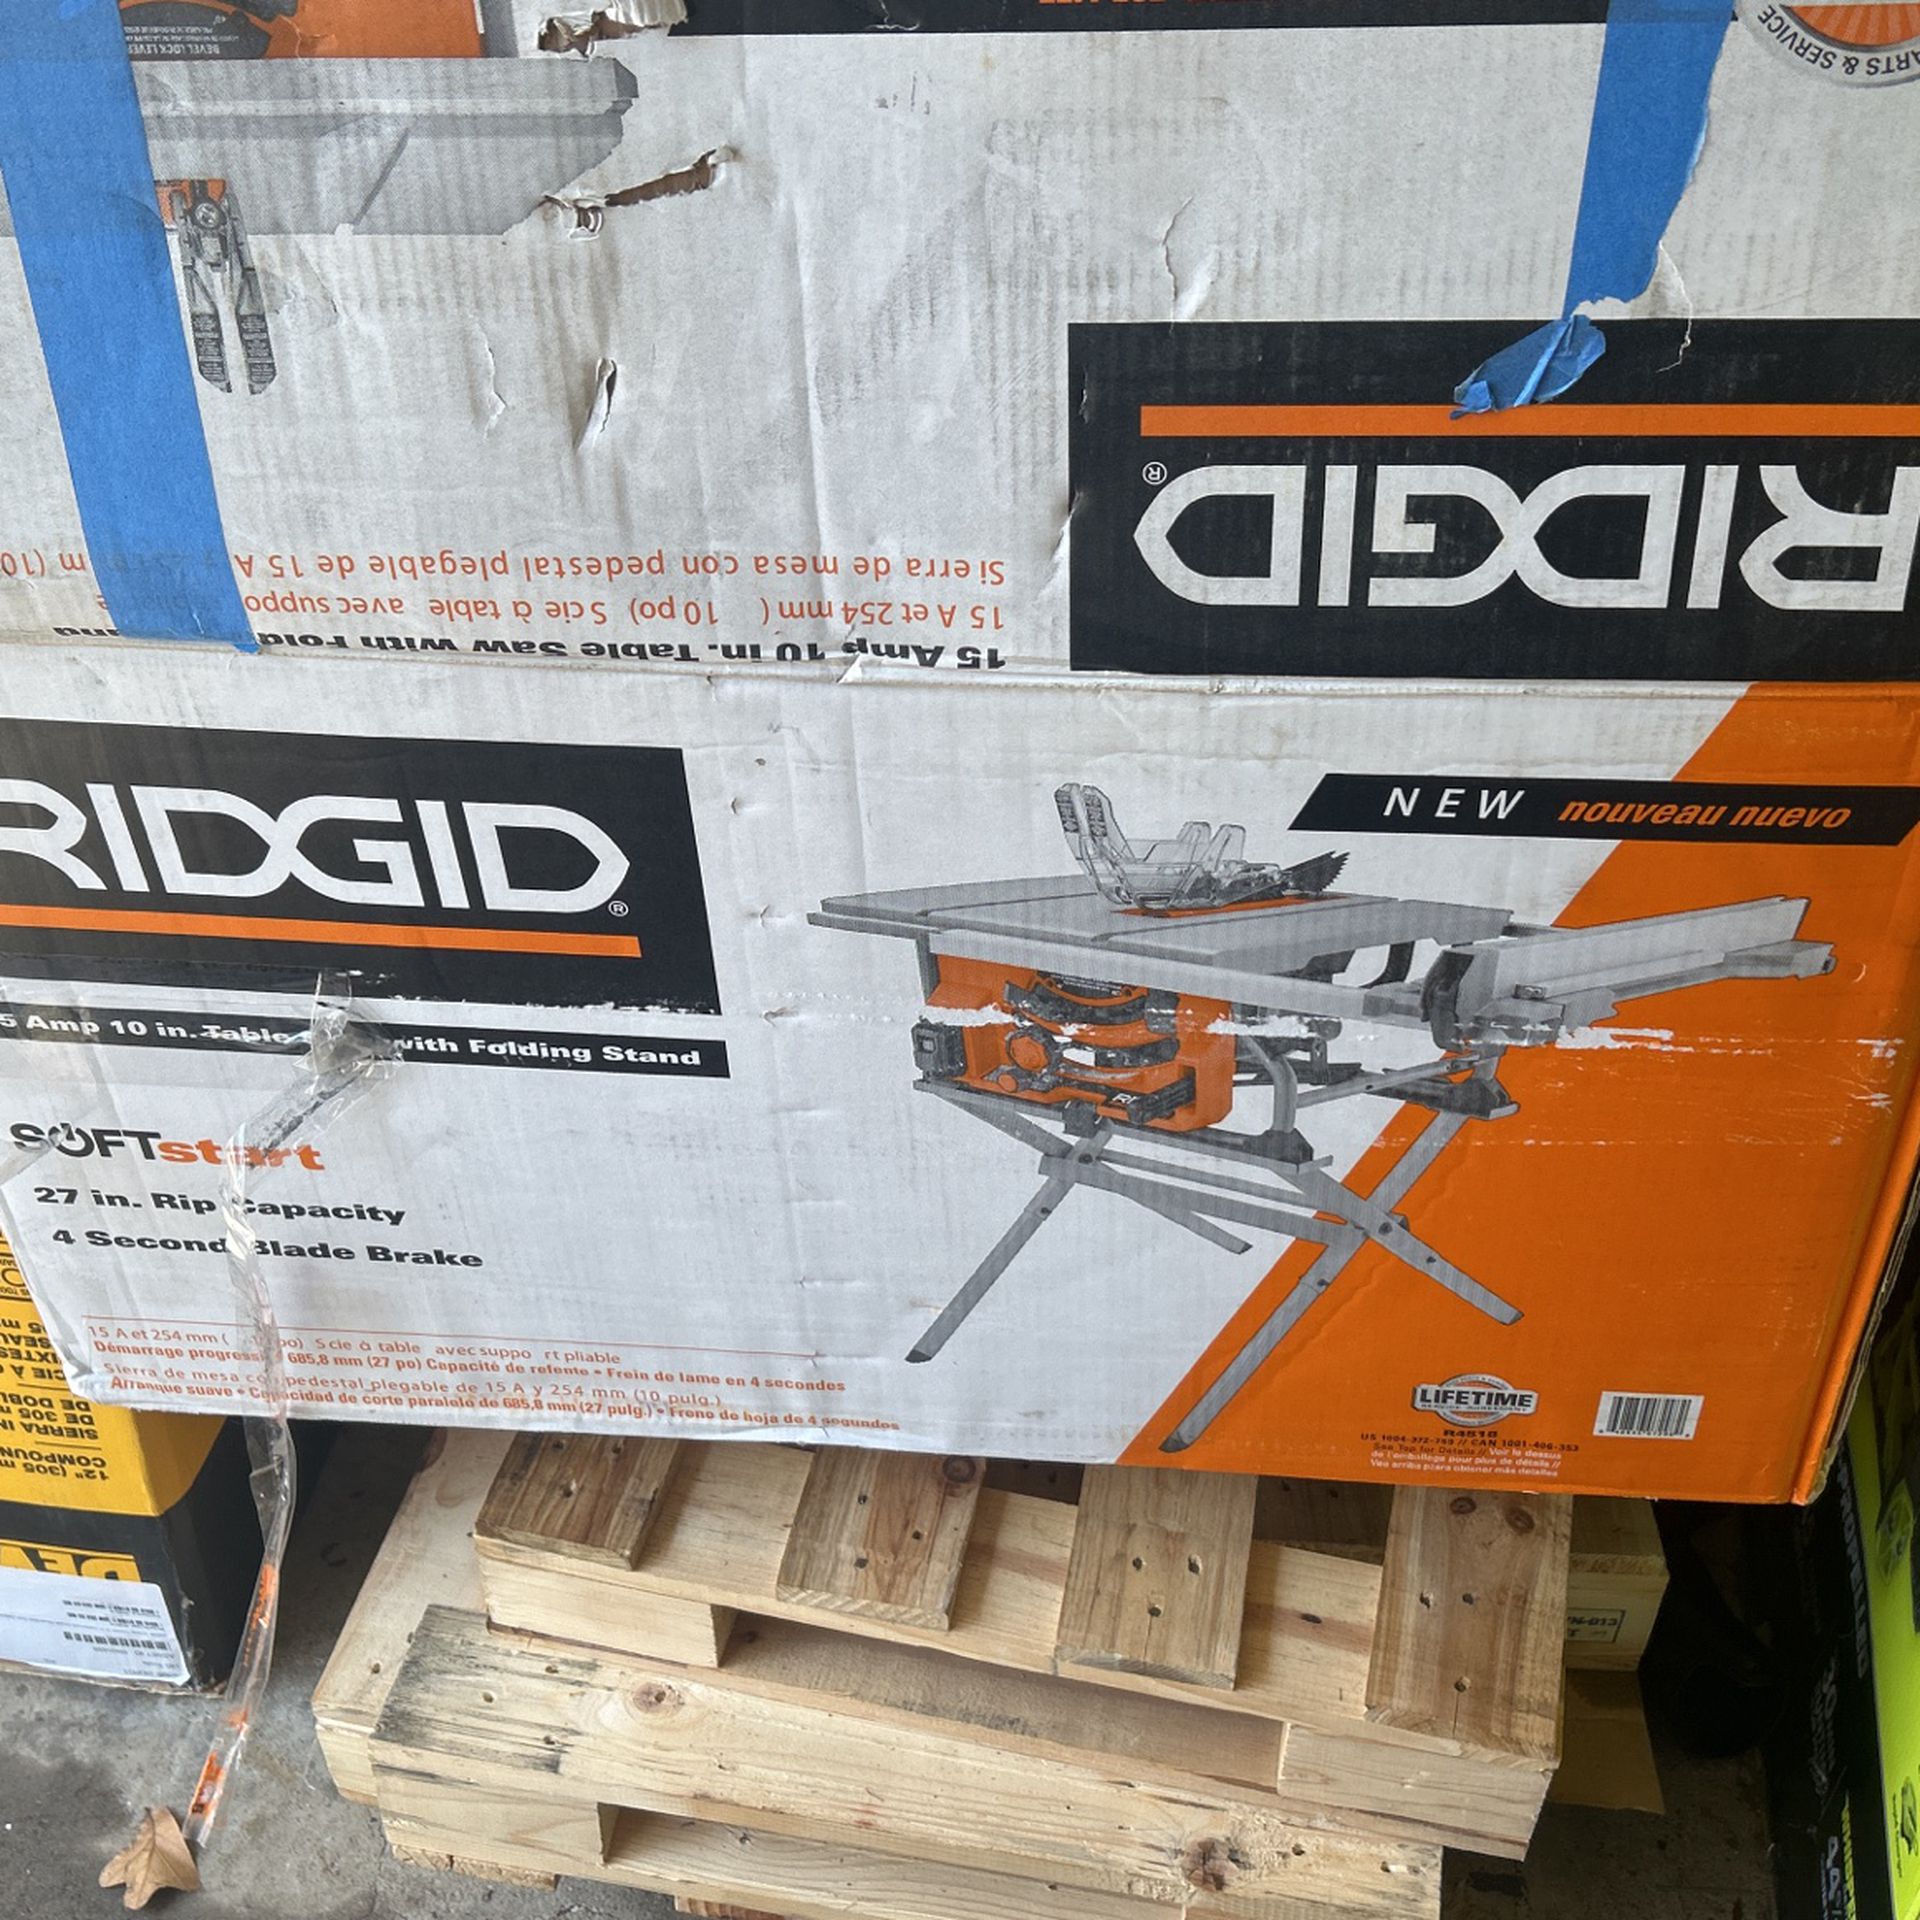 RIDGID R4518 Professional Table Saw